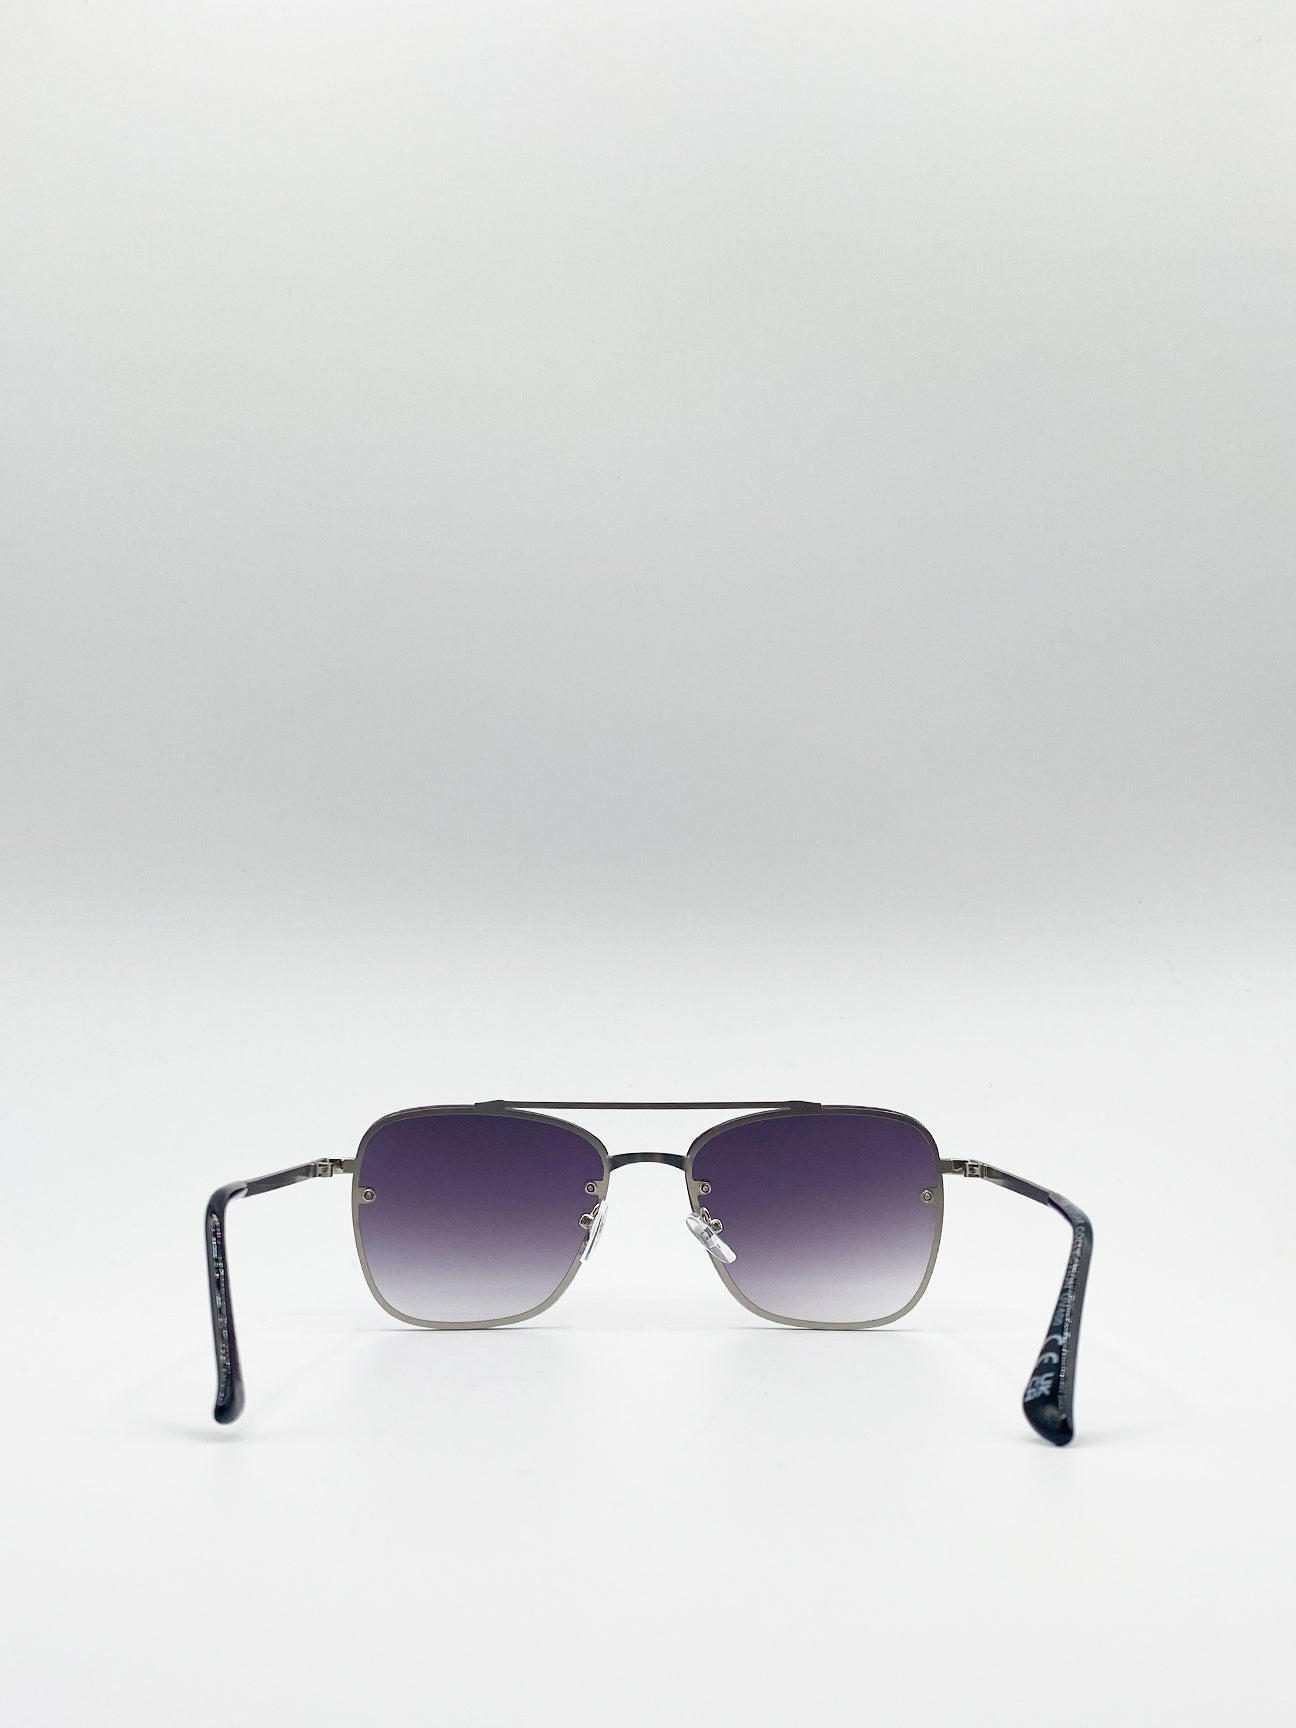 Silver and Black Frame Aviator Sunglasses with Smoke Lenses